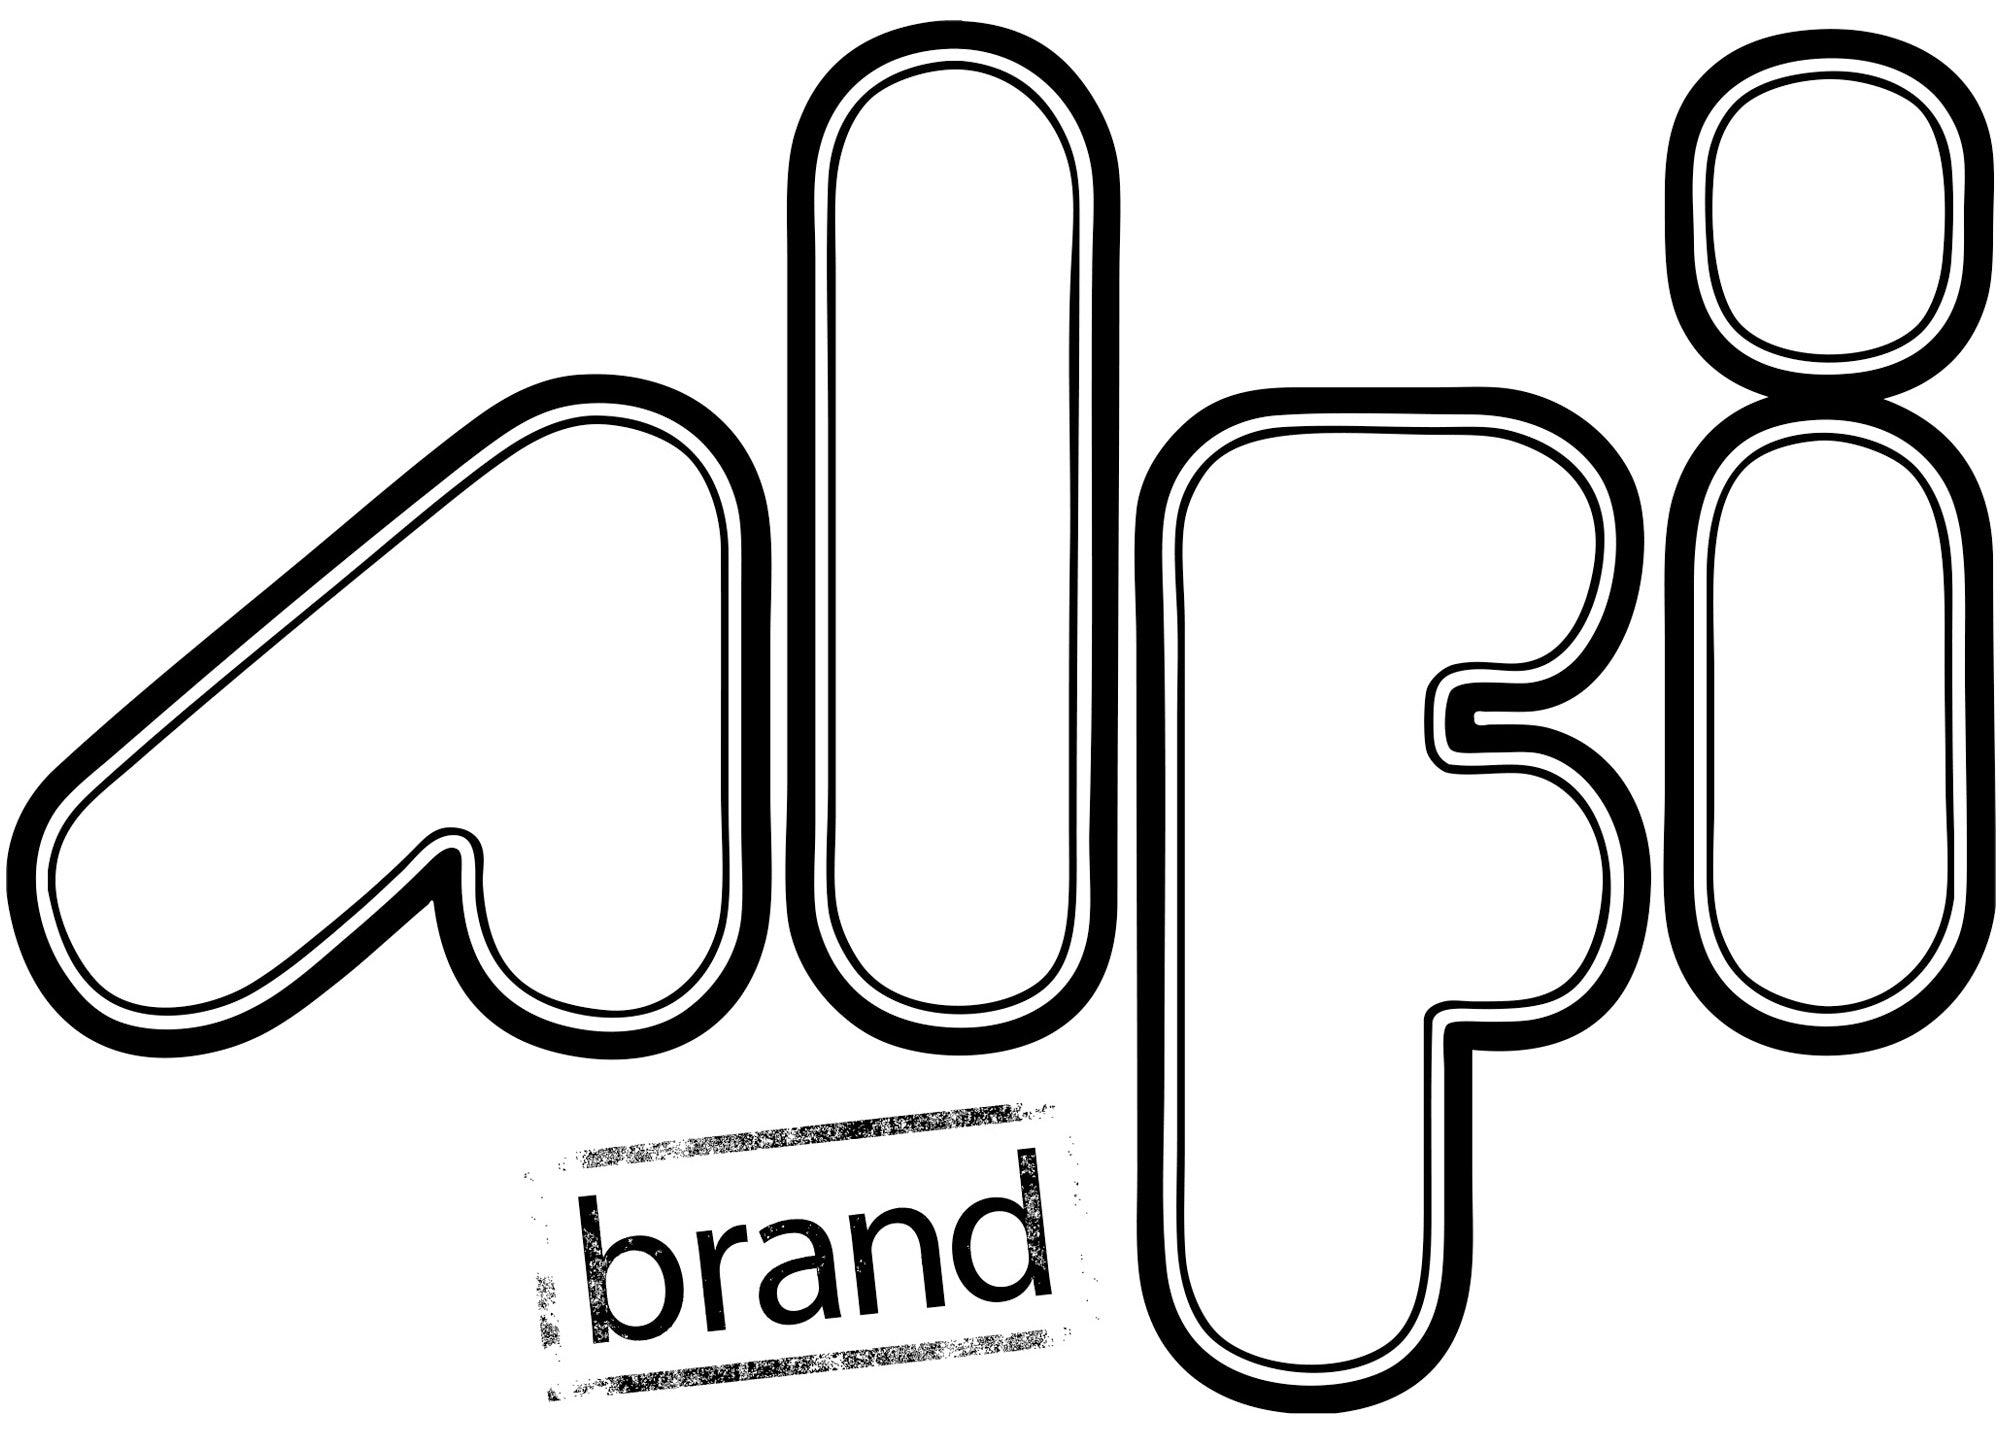 ALFI Brand - 59 inch Black & White Rectangular Acrylic Free Standing Soaking Bathtub | AB8834